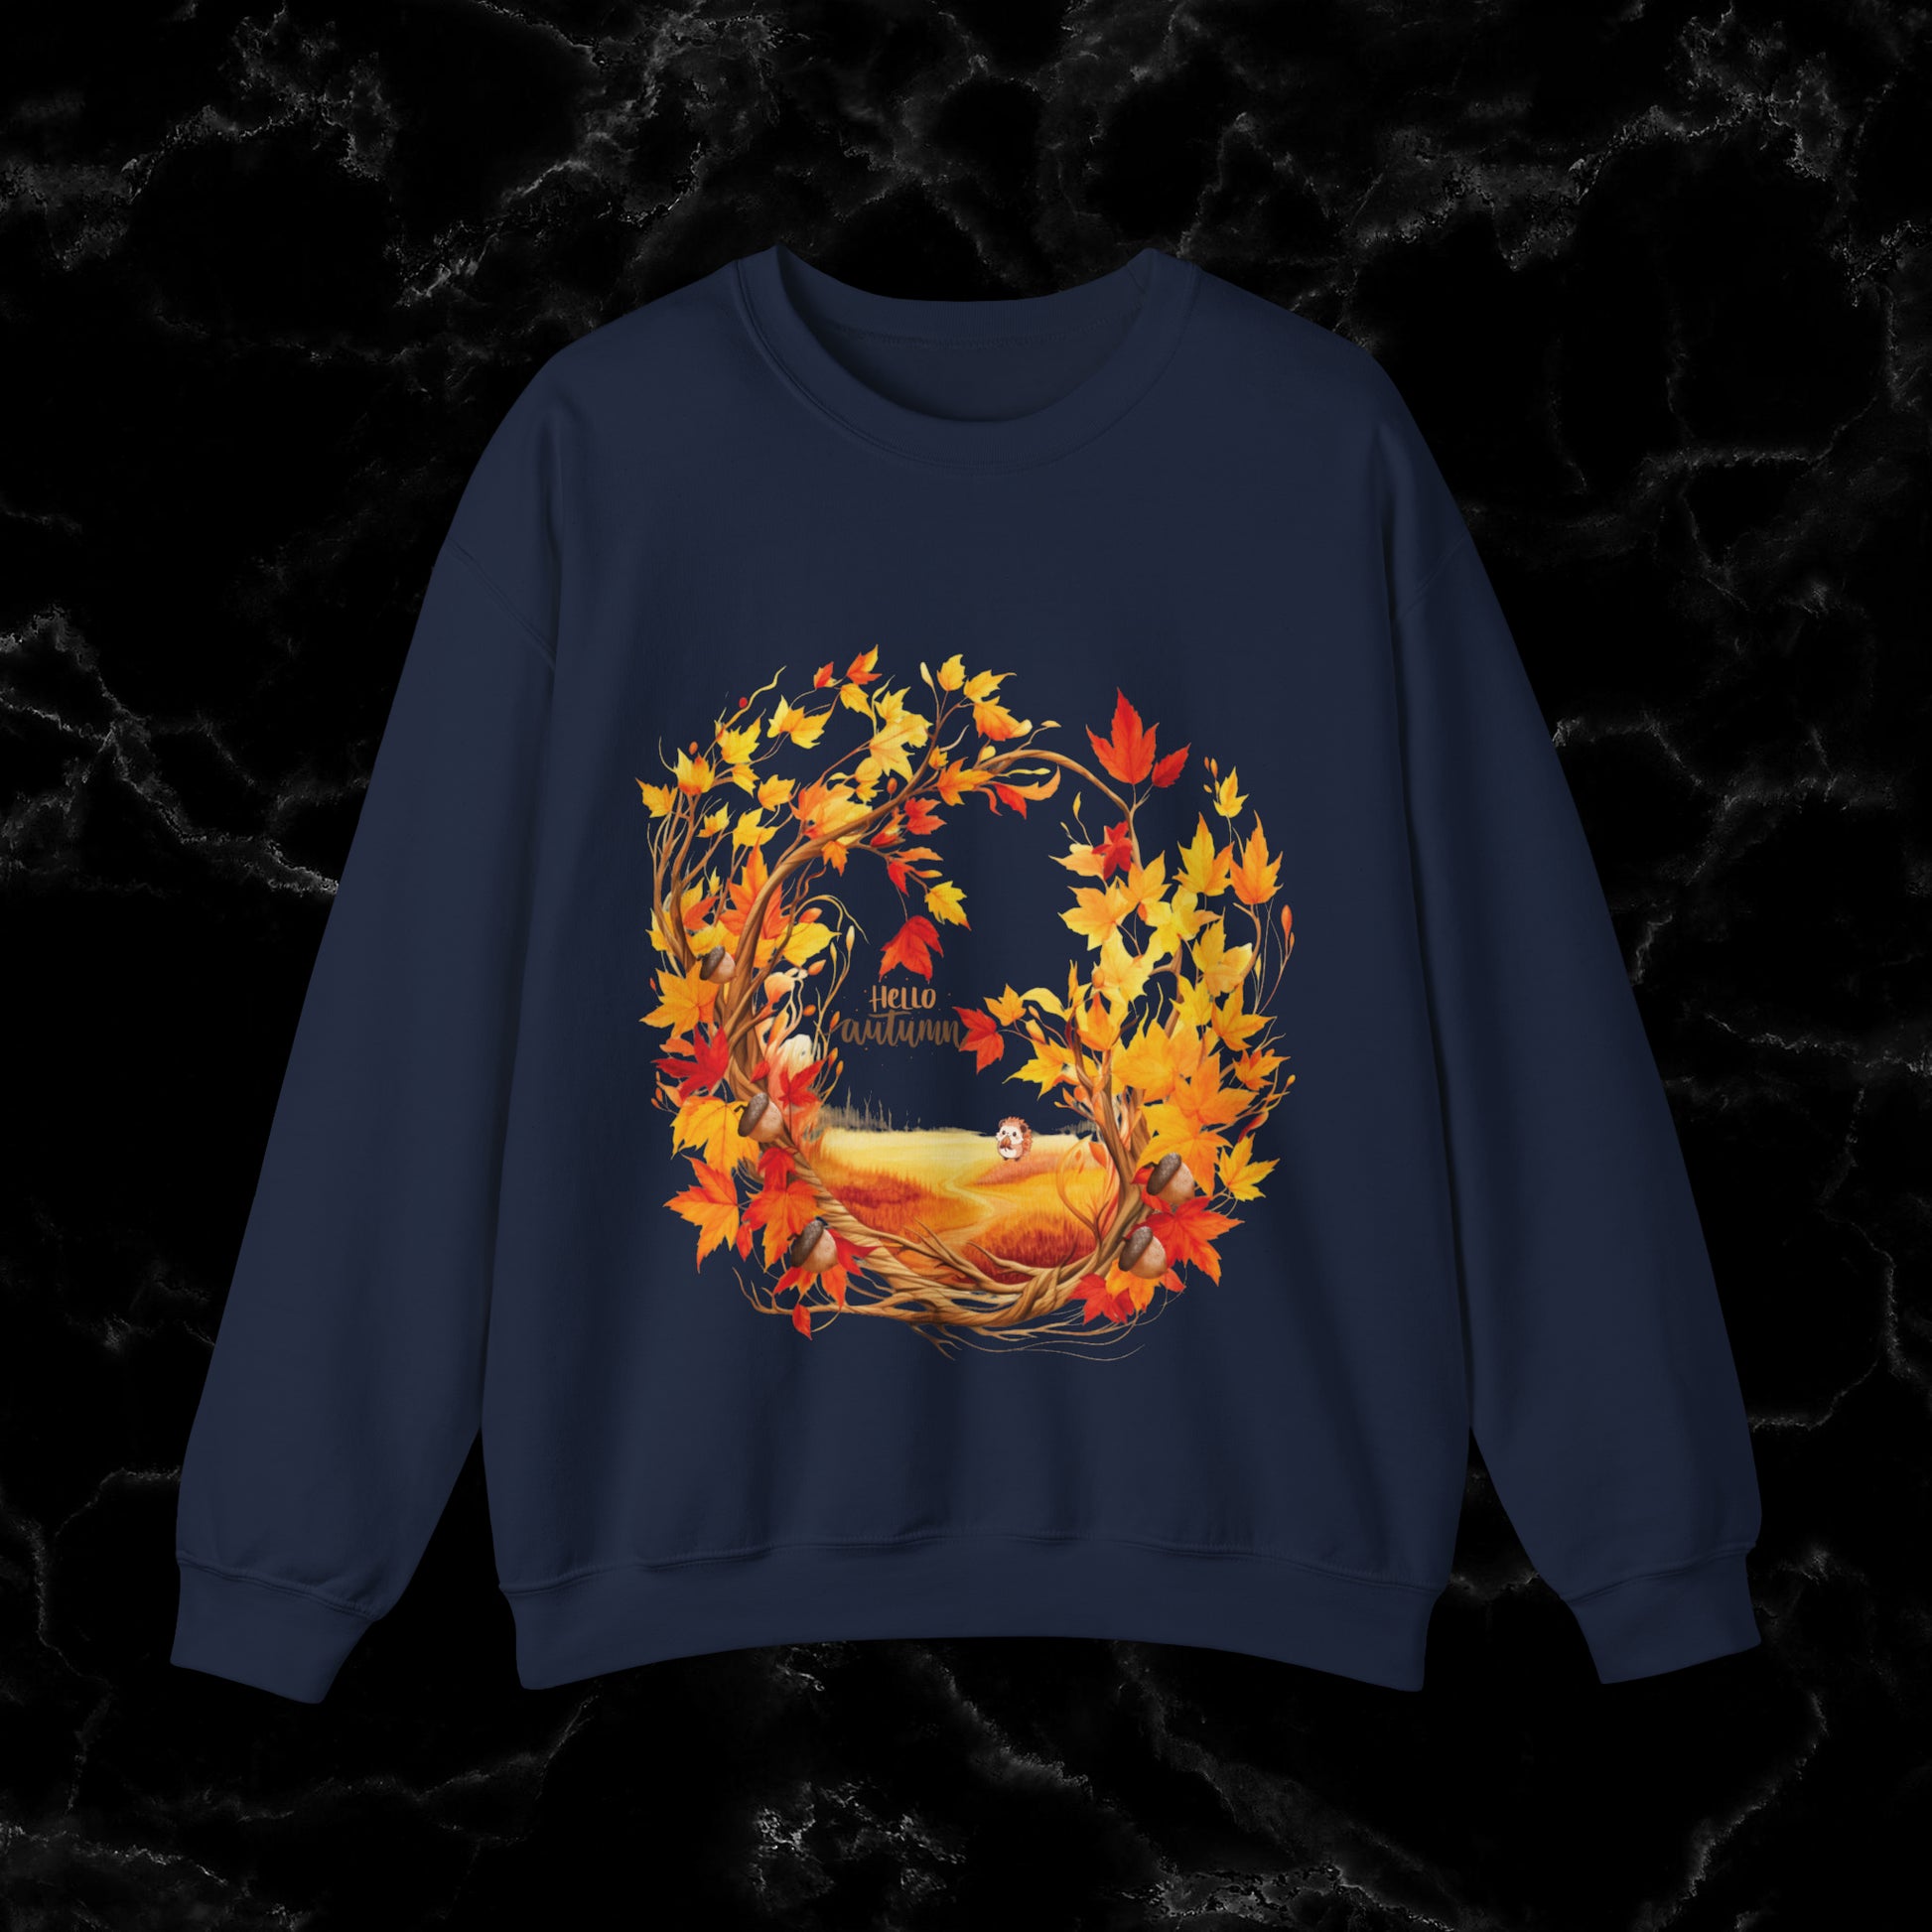 Hello Autumn Sweatshirt | Fall Design - Fall Seasonal Sweatshirt - Beauty Of Autumn Sweatshirt M Navy 